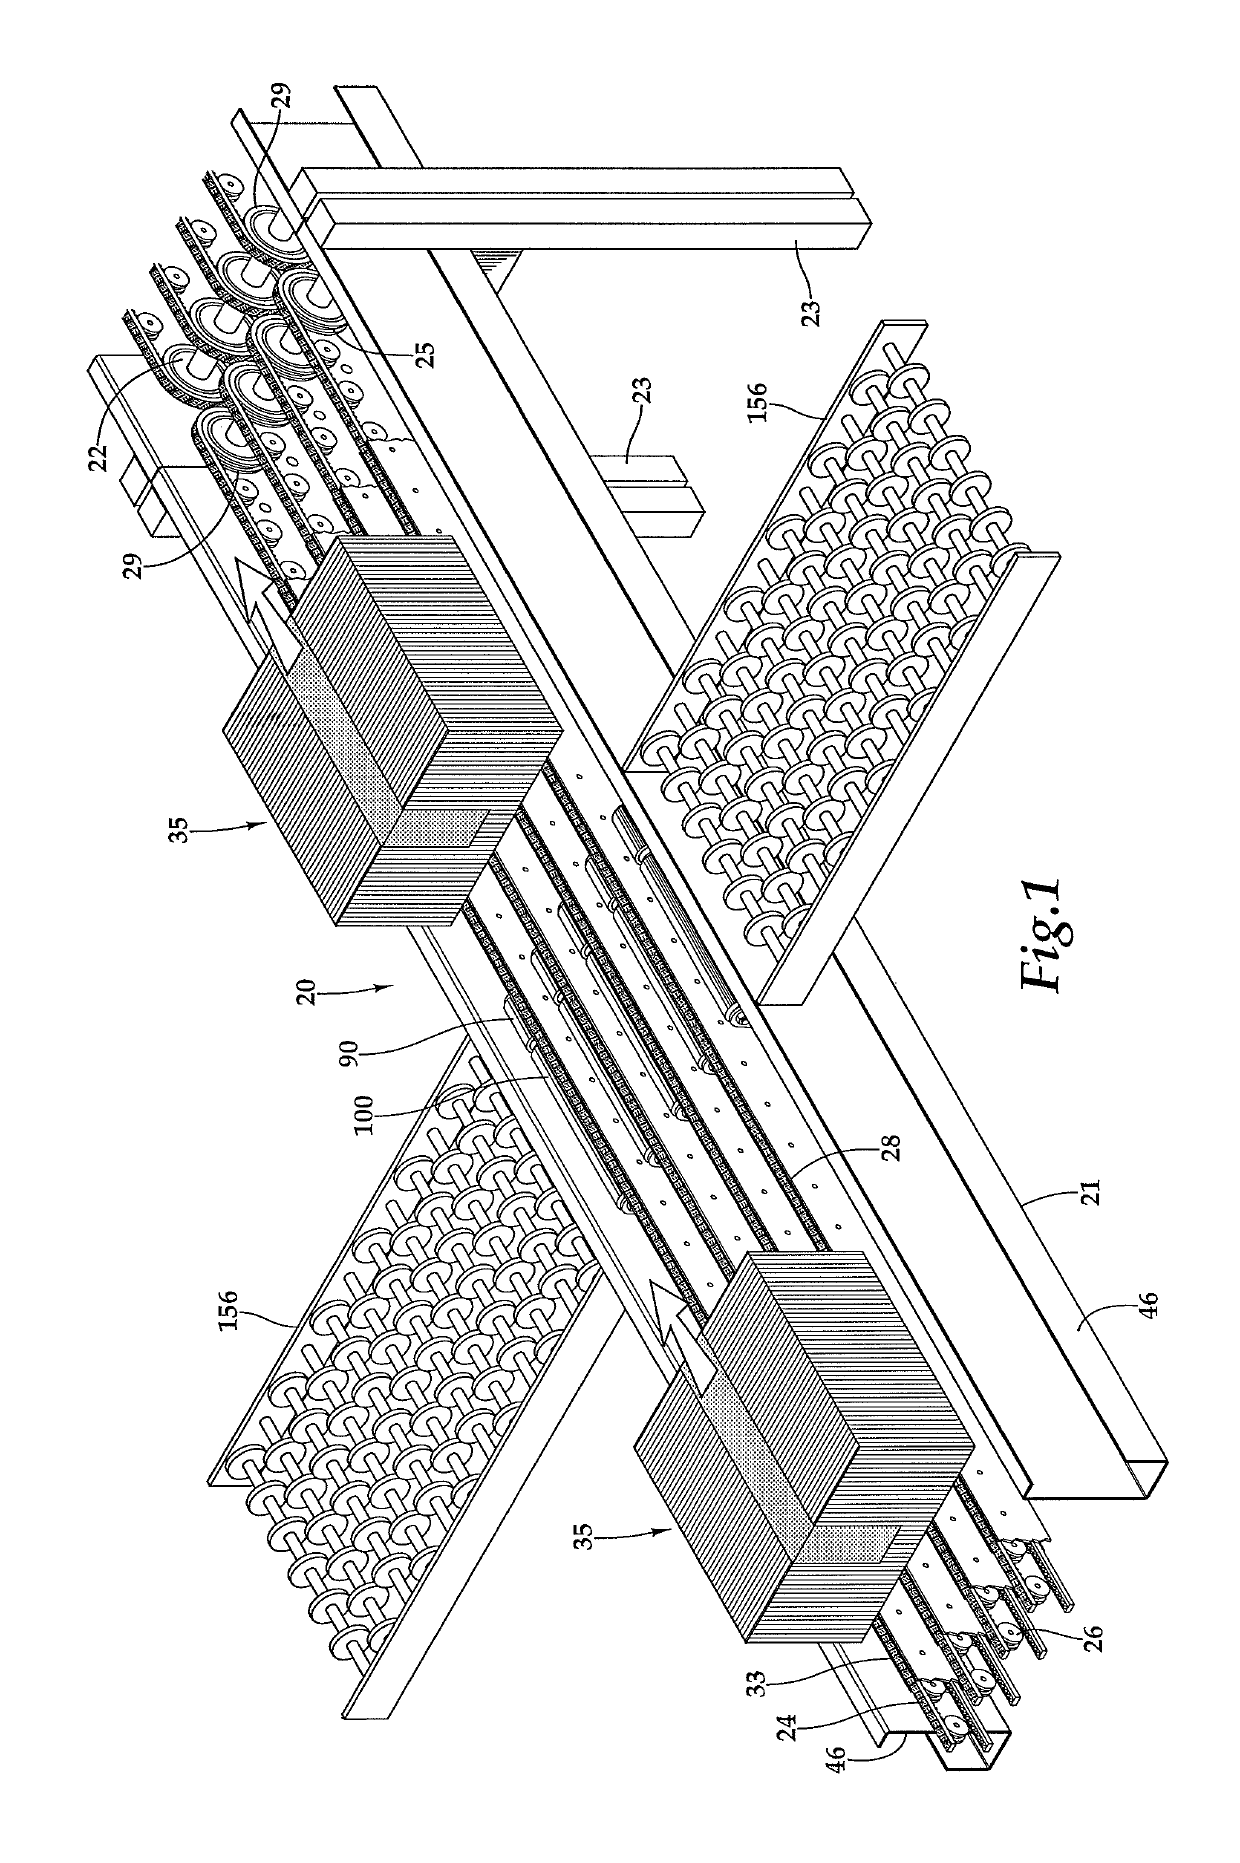 Narrow belt conveyor with 90 degree cross transfer